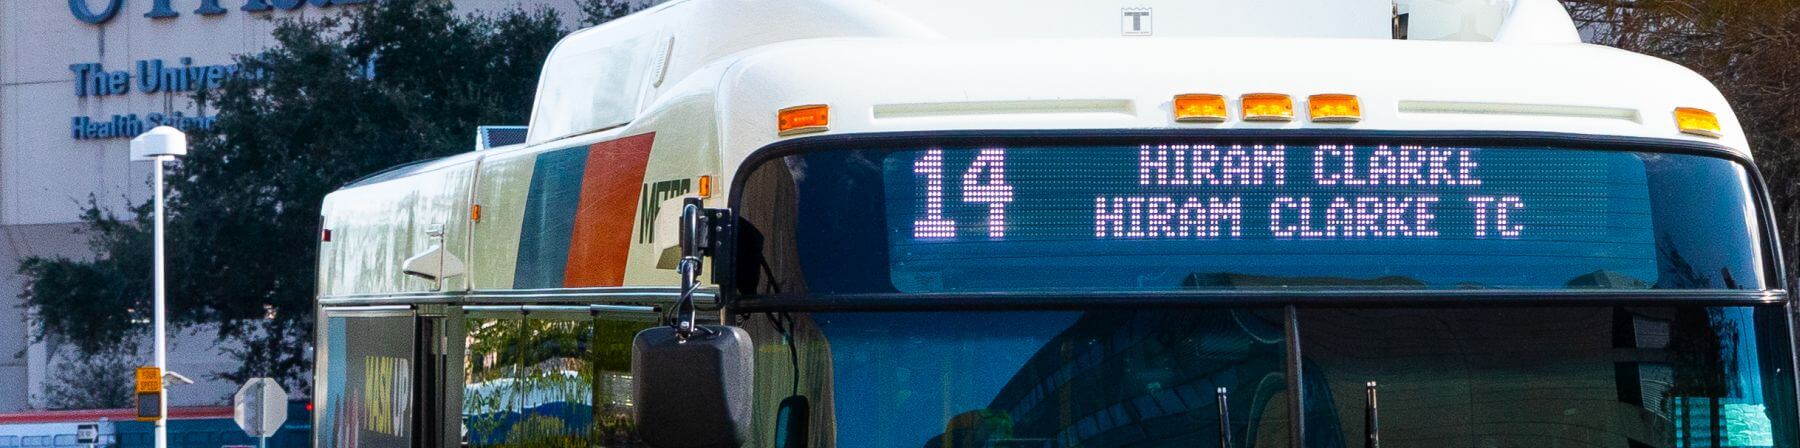 14 Hiram Clarke bus